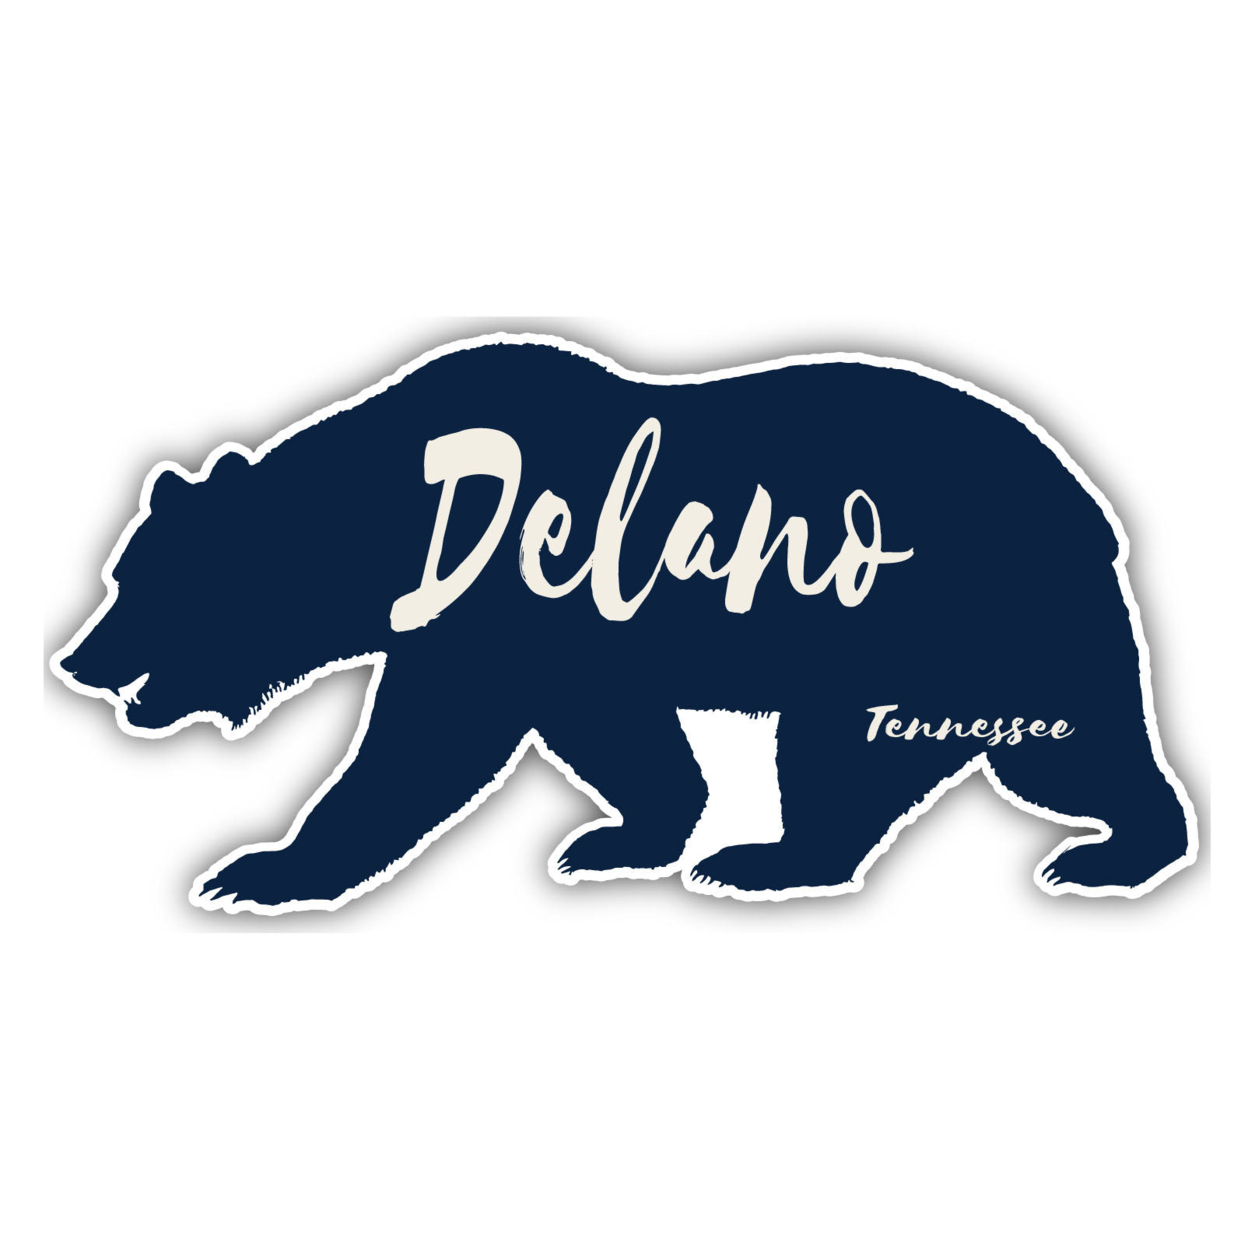 Delano Tennessee Souvenir Decorative Stickers (Choose Theme And Size) - Single Unit, 10-Inch, Bear